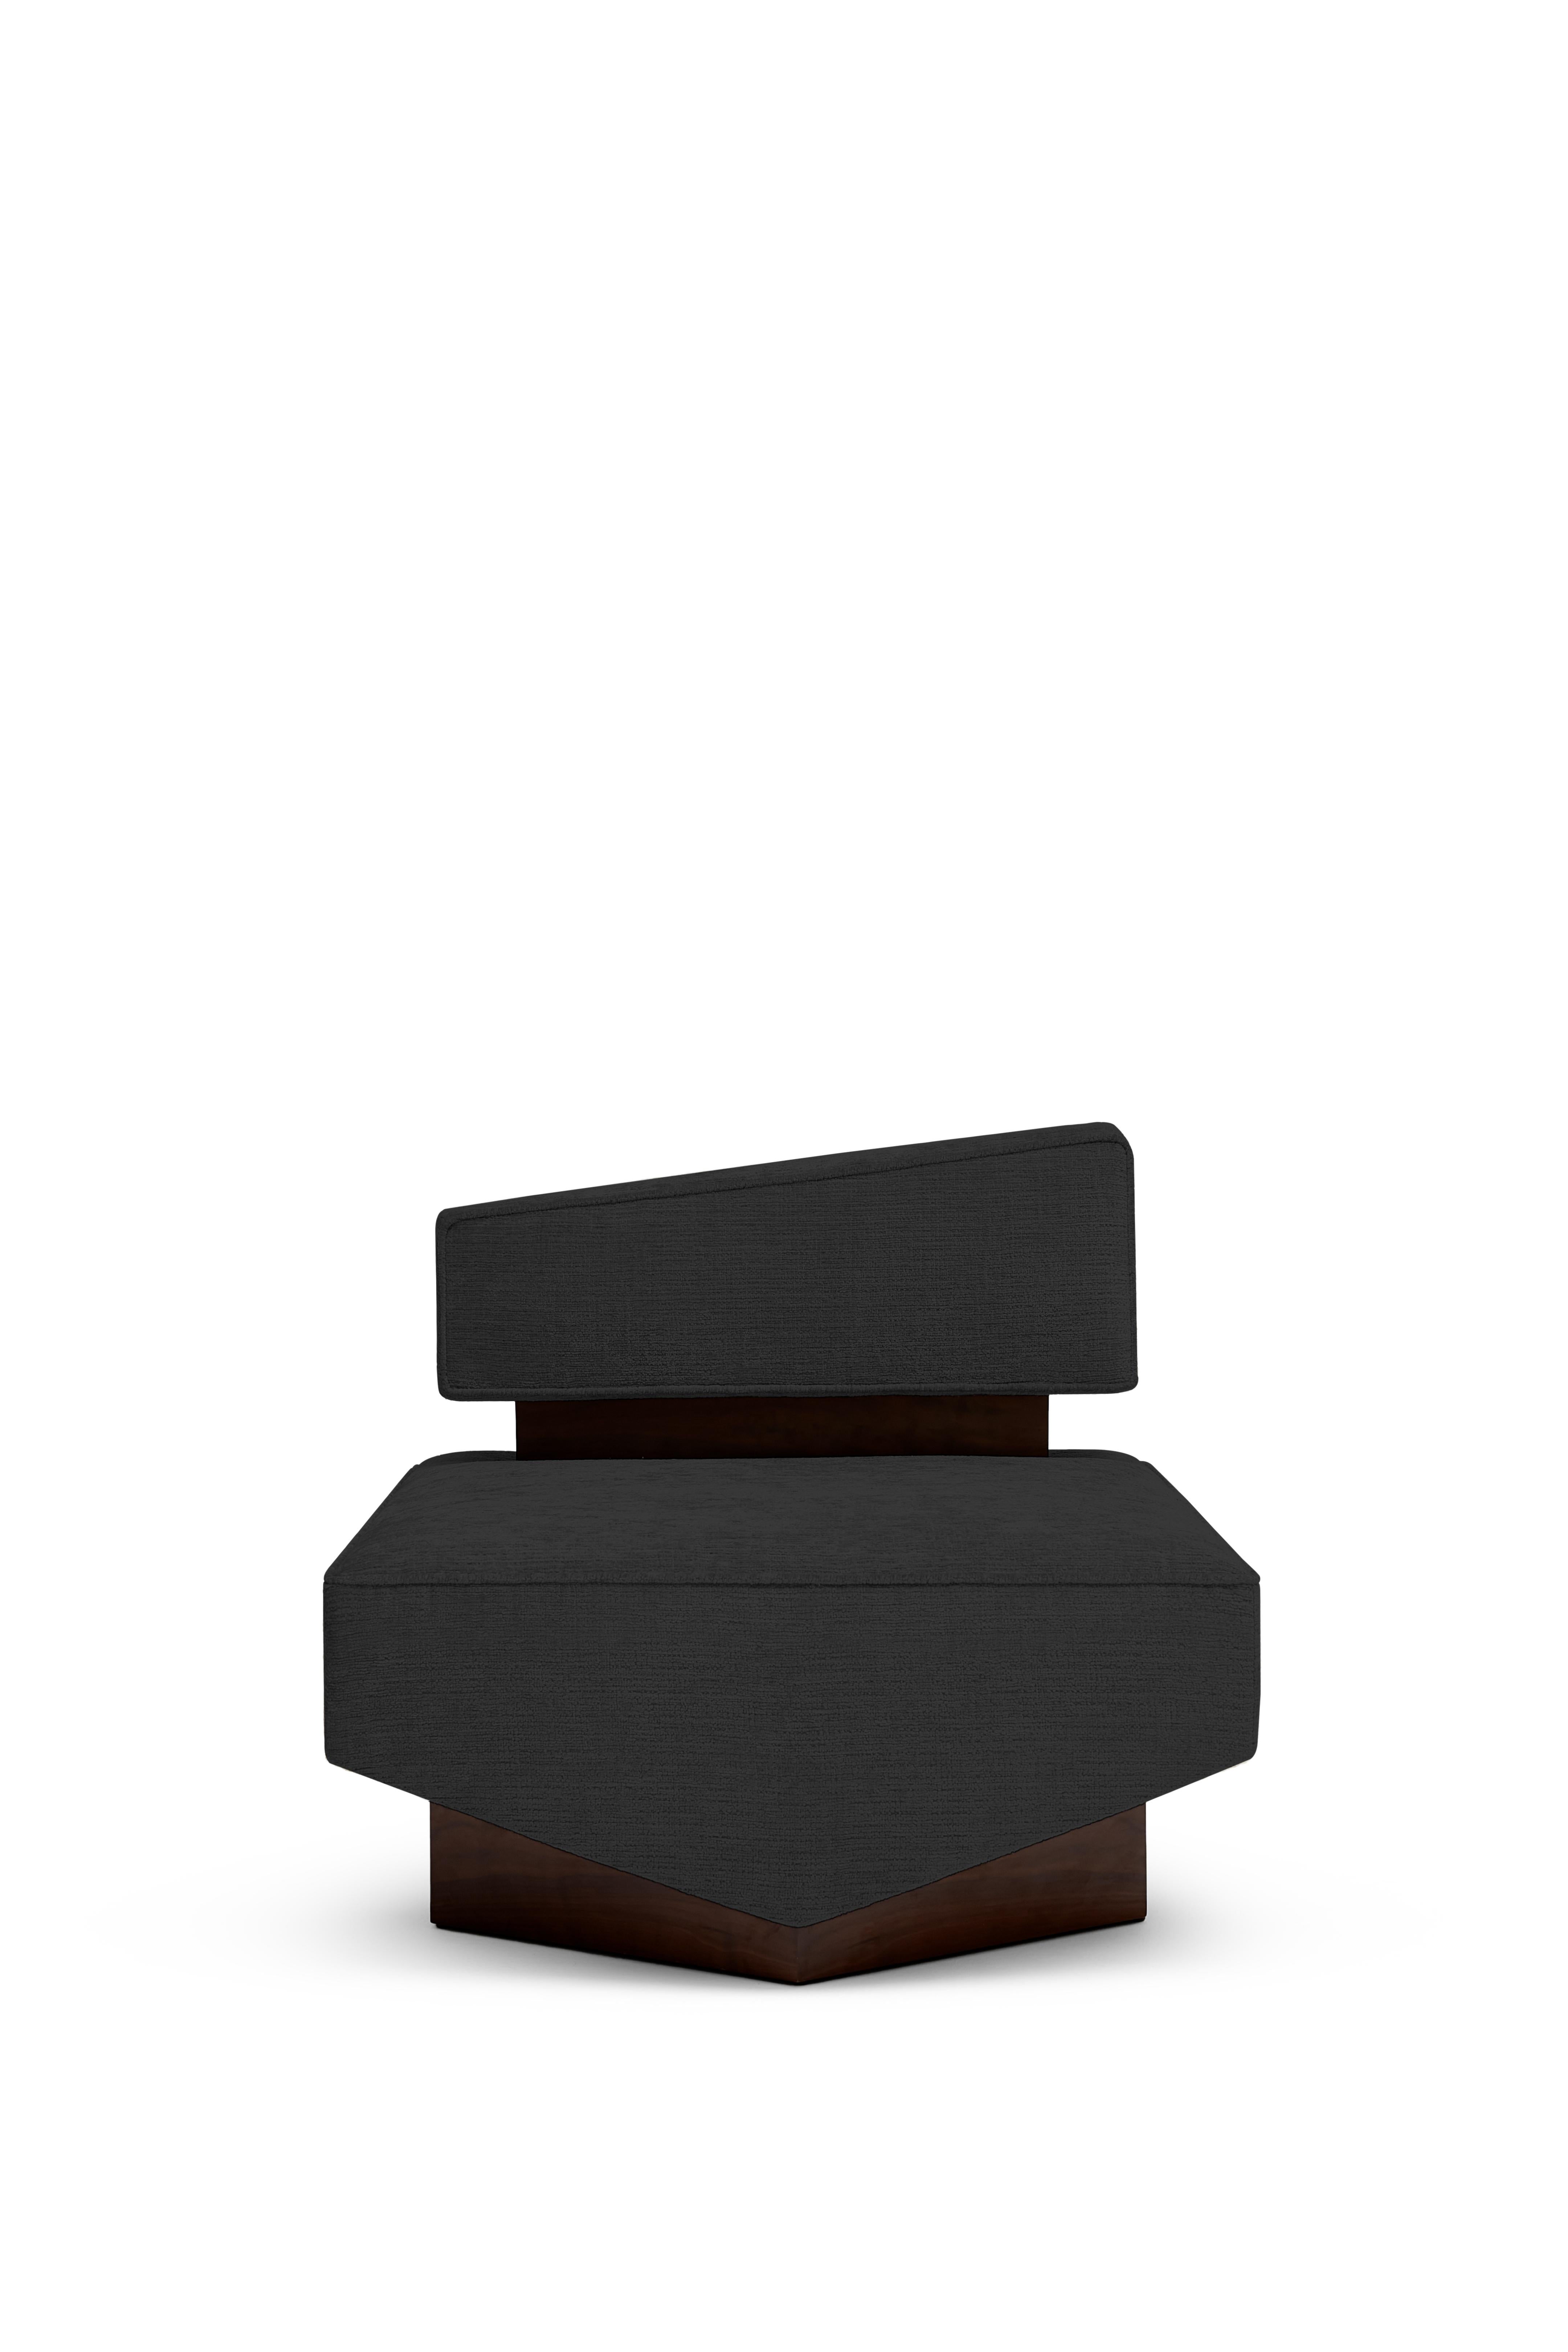 DIVERGENT Armchair by Marta Delgado Studio

Fabric: Vintage 
Color: Dark Gray 
Wood: American Walnut Veener

Dimensions:
Width: 31.5” 80 cm 
Depth: 32.7” 83 cm 
Height: 29.1” 74 cm
Seat Height: 15.7” 40 cm

Marta Delgado is a Portuguese